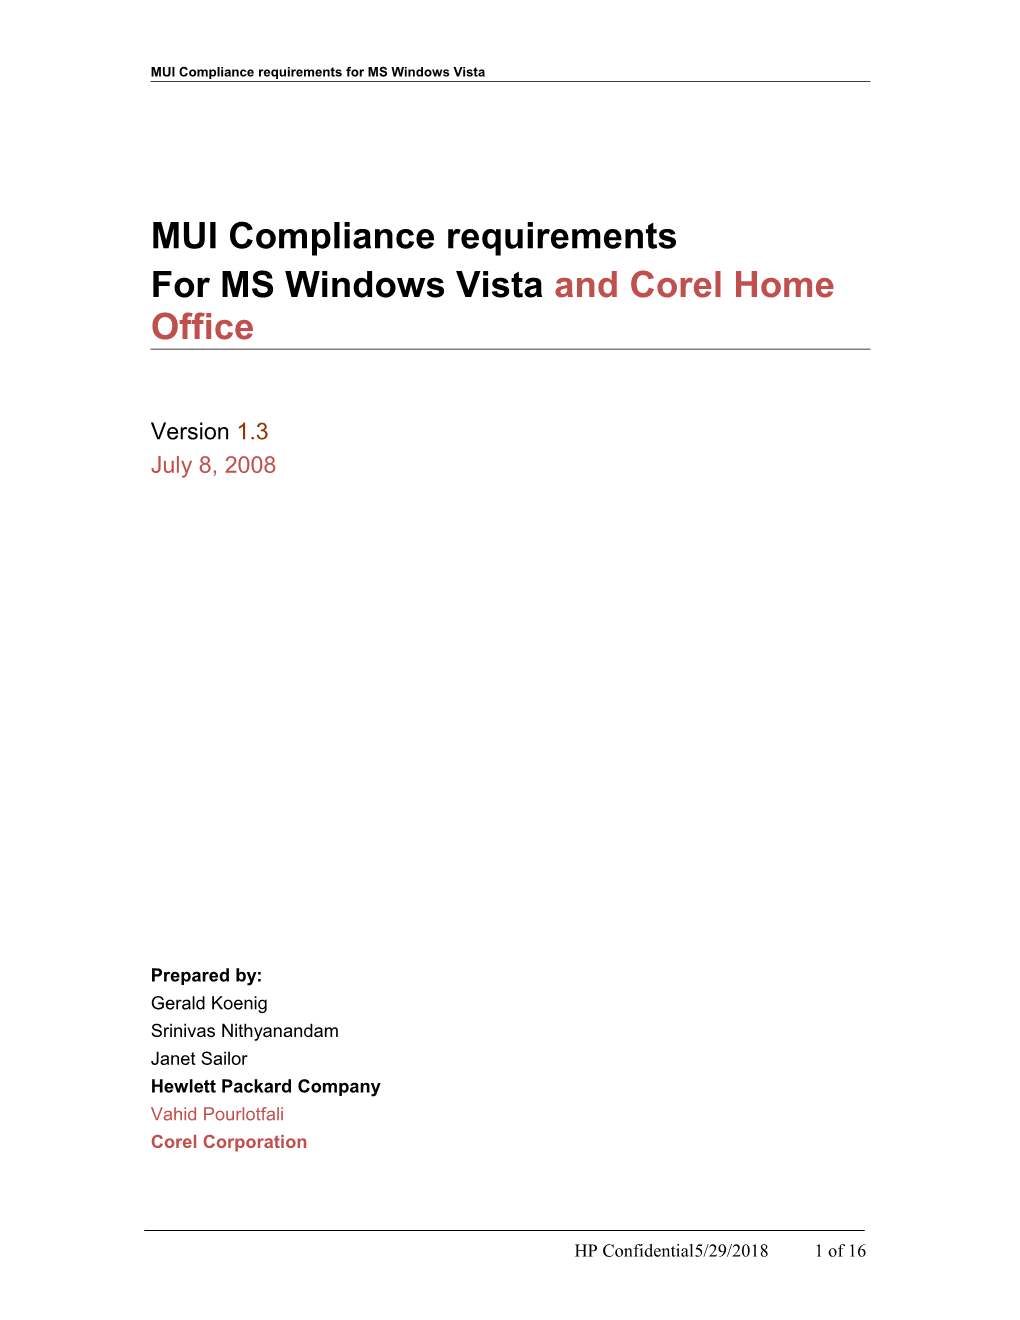 MUI Requirements Document